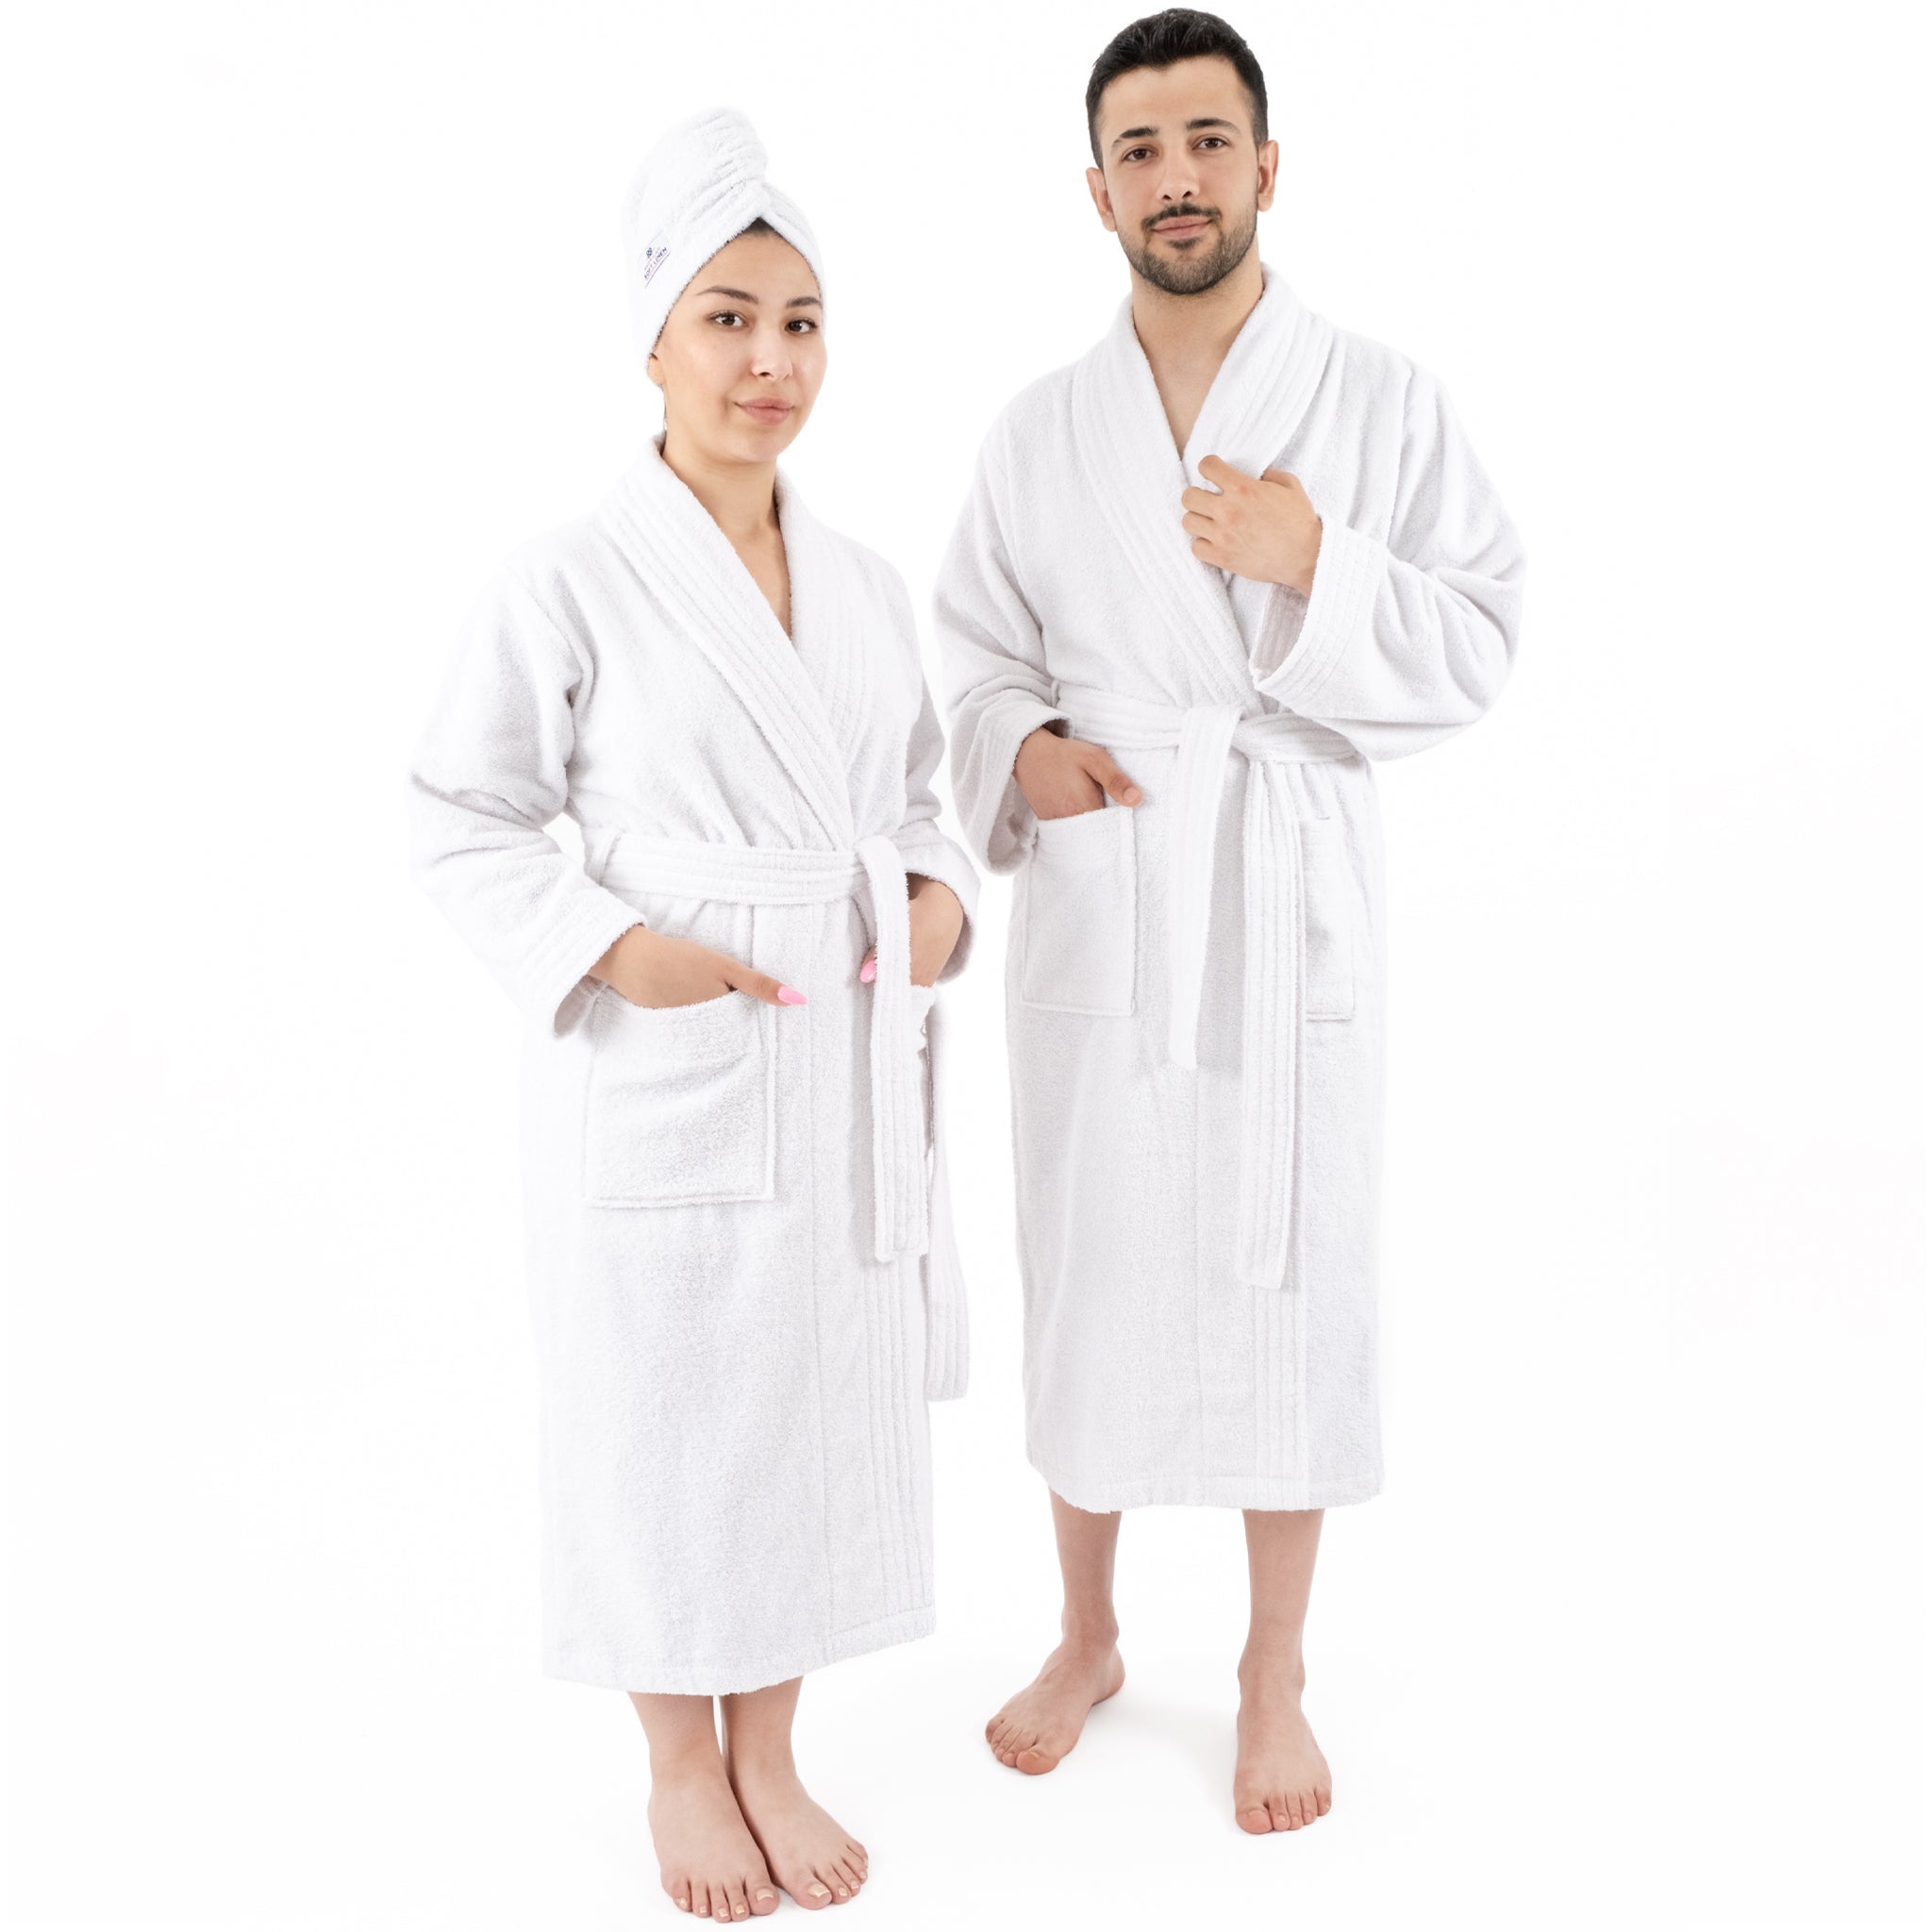 American Soft Linen 100% Cotton Bathrobes for Women and Men, Soft, Lightweight, White S-M, 1